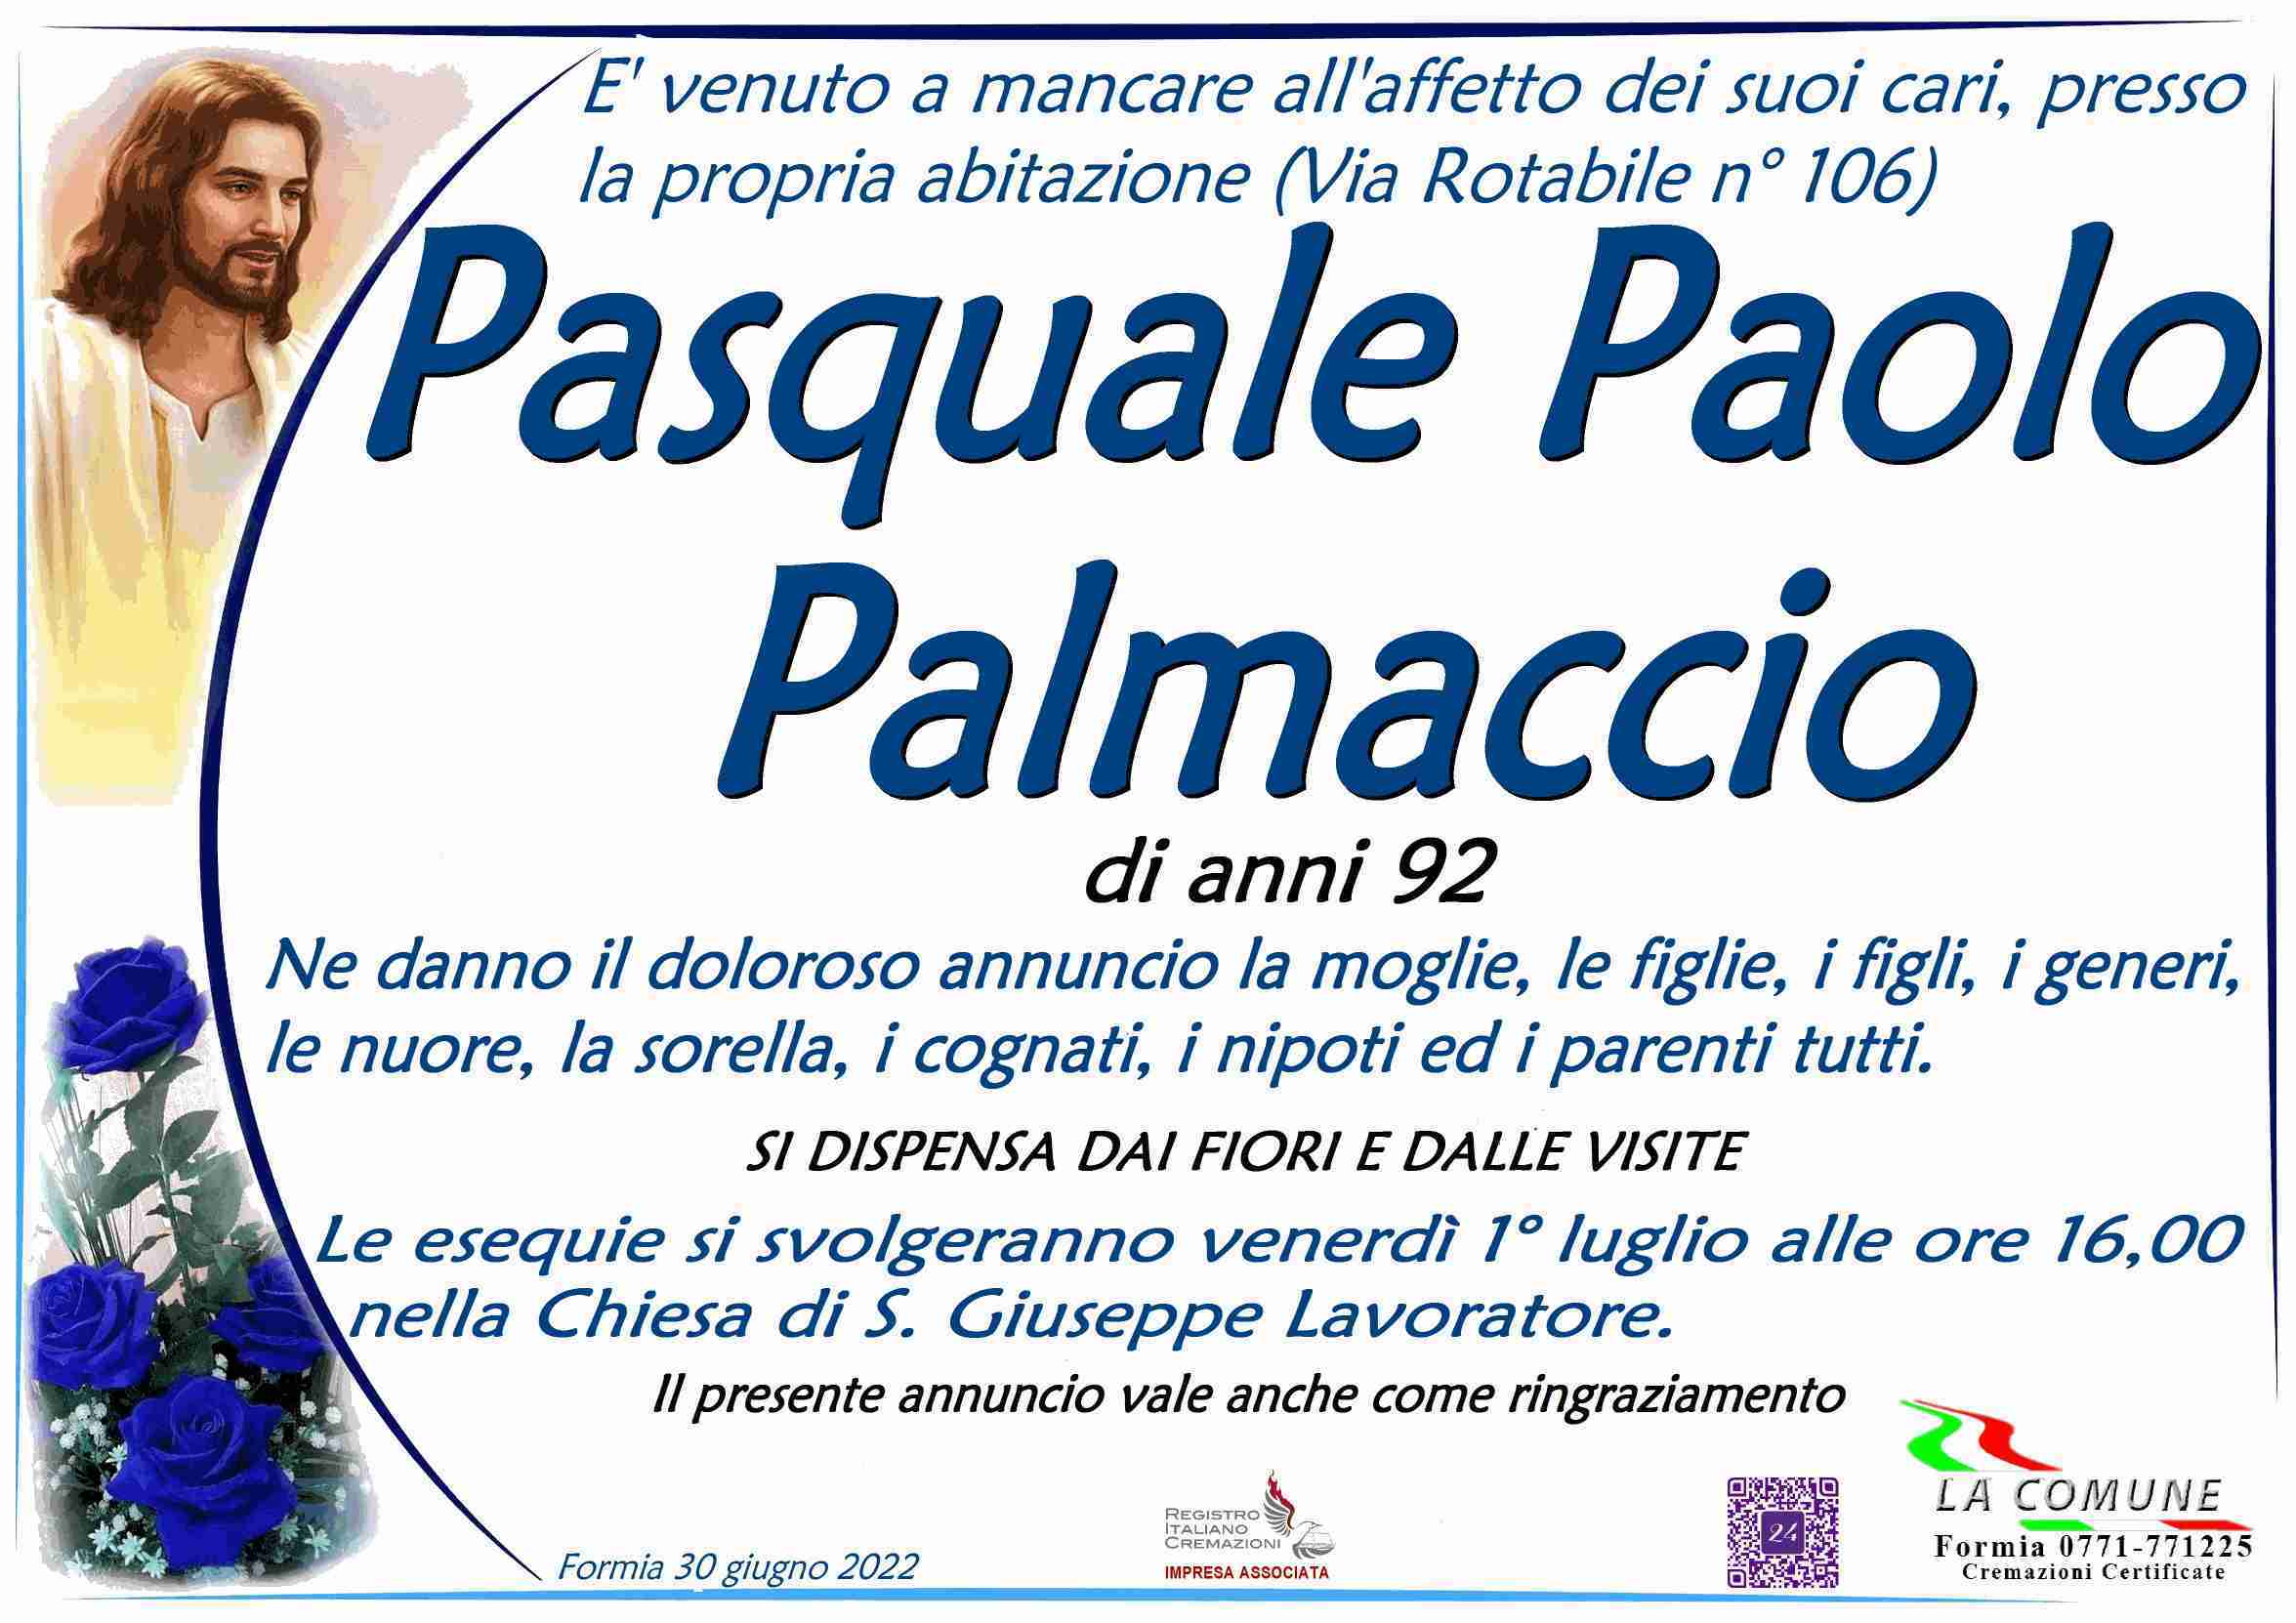 Pasquale Paolo Palmaccio